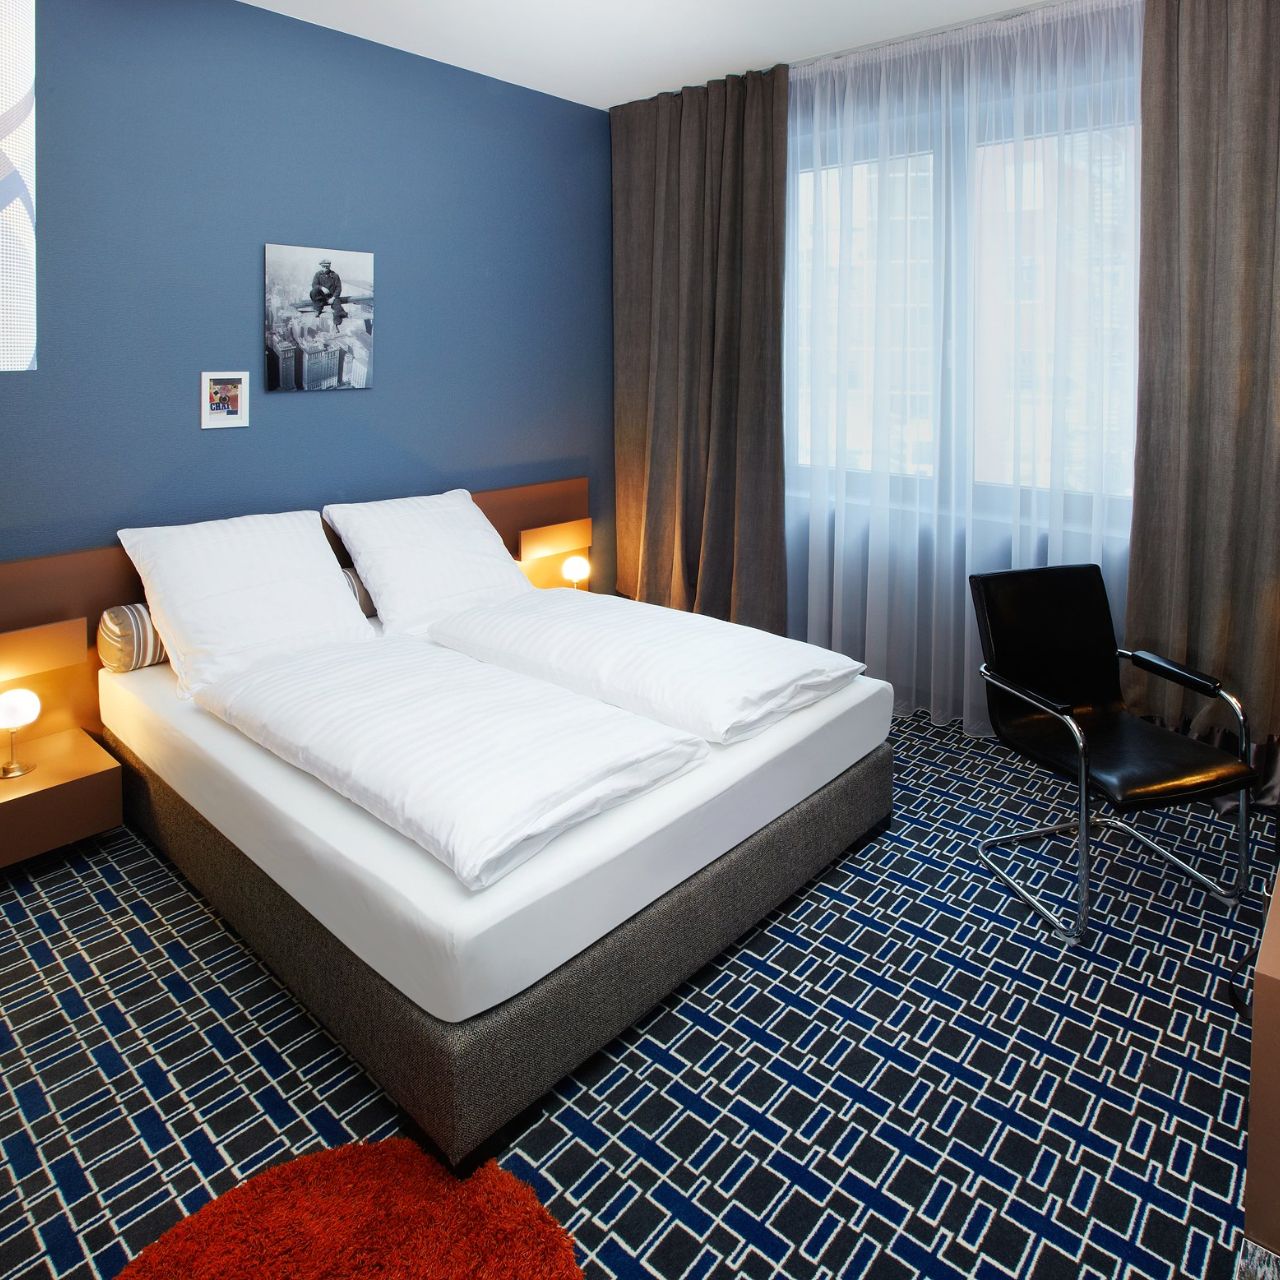 25hours Hotel The Trip - Frankfurt am Main - HOTEL INFO